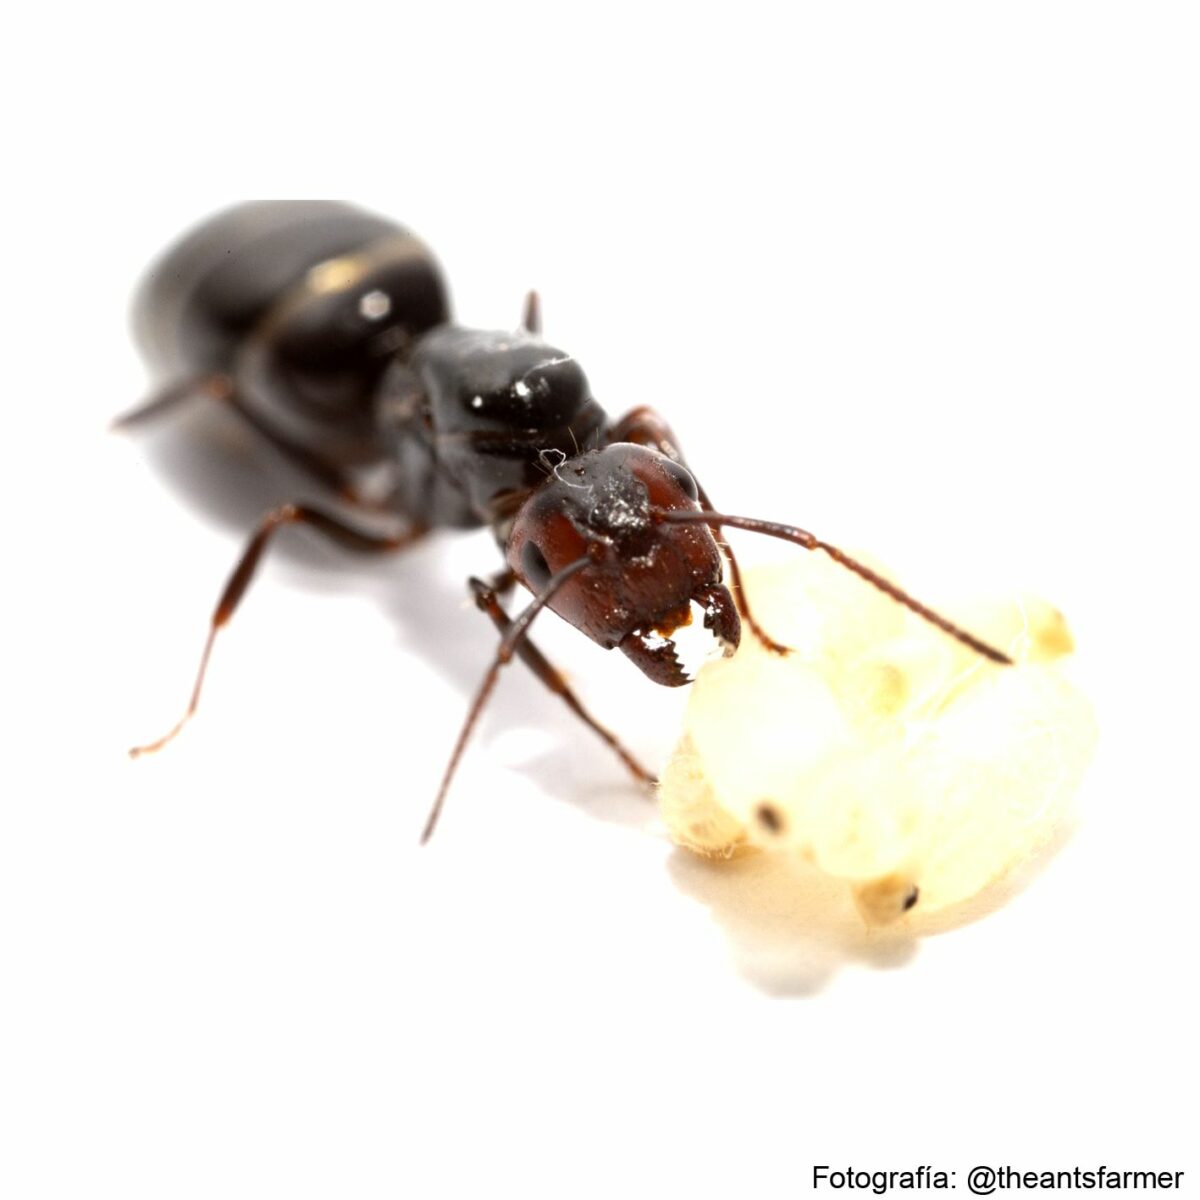 Camponotus lateralis ants